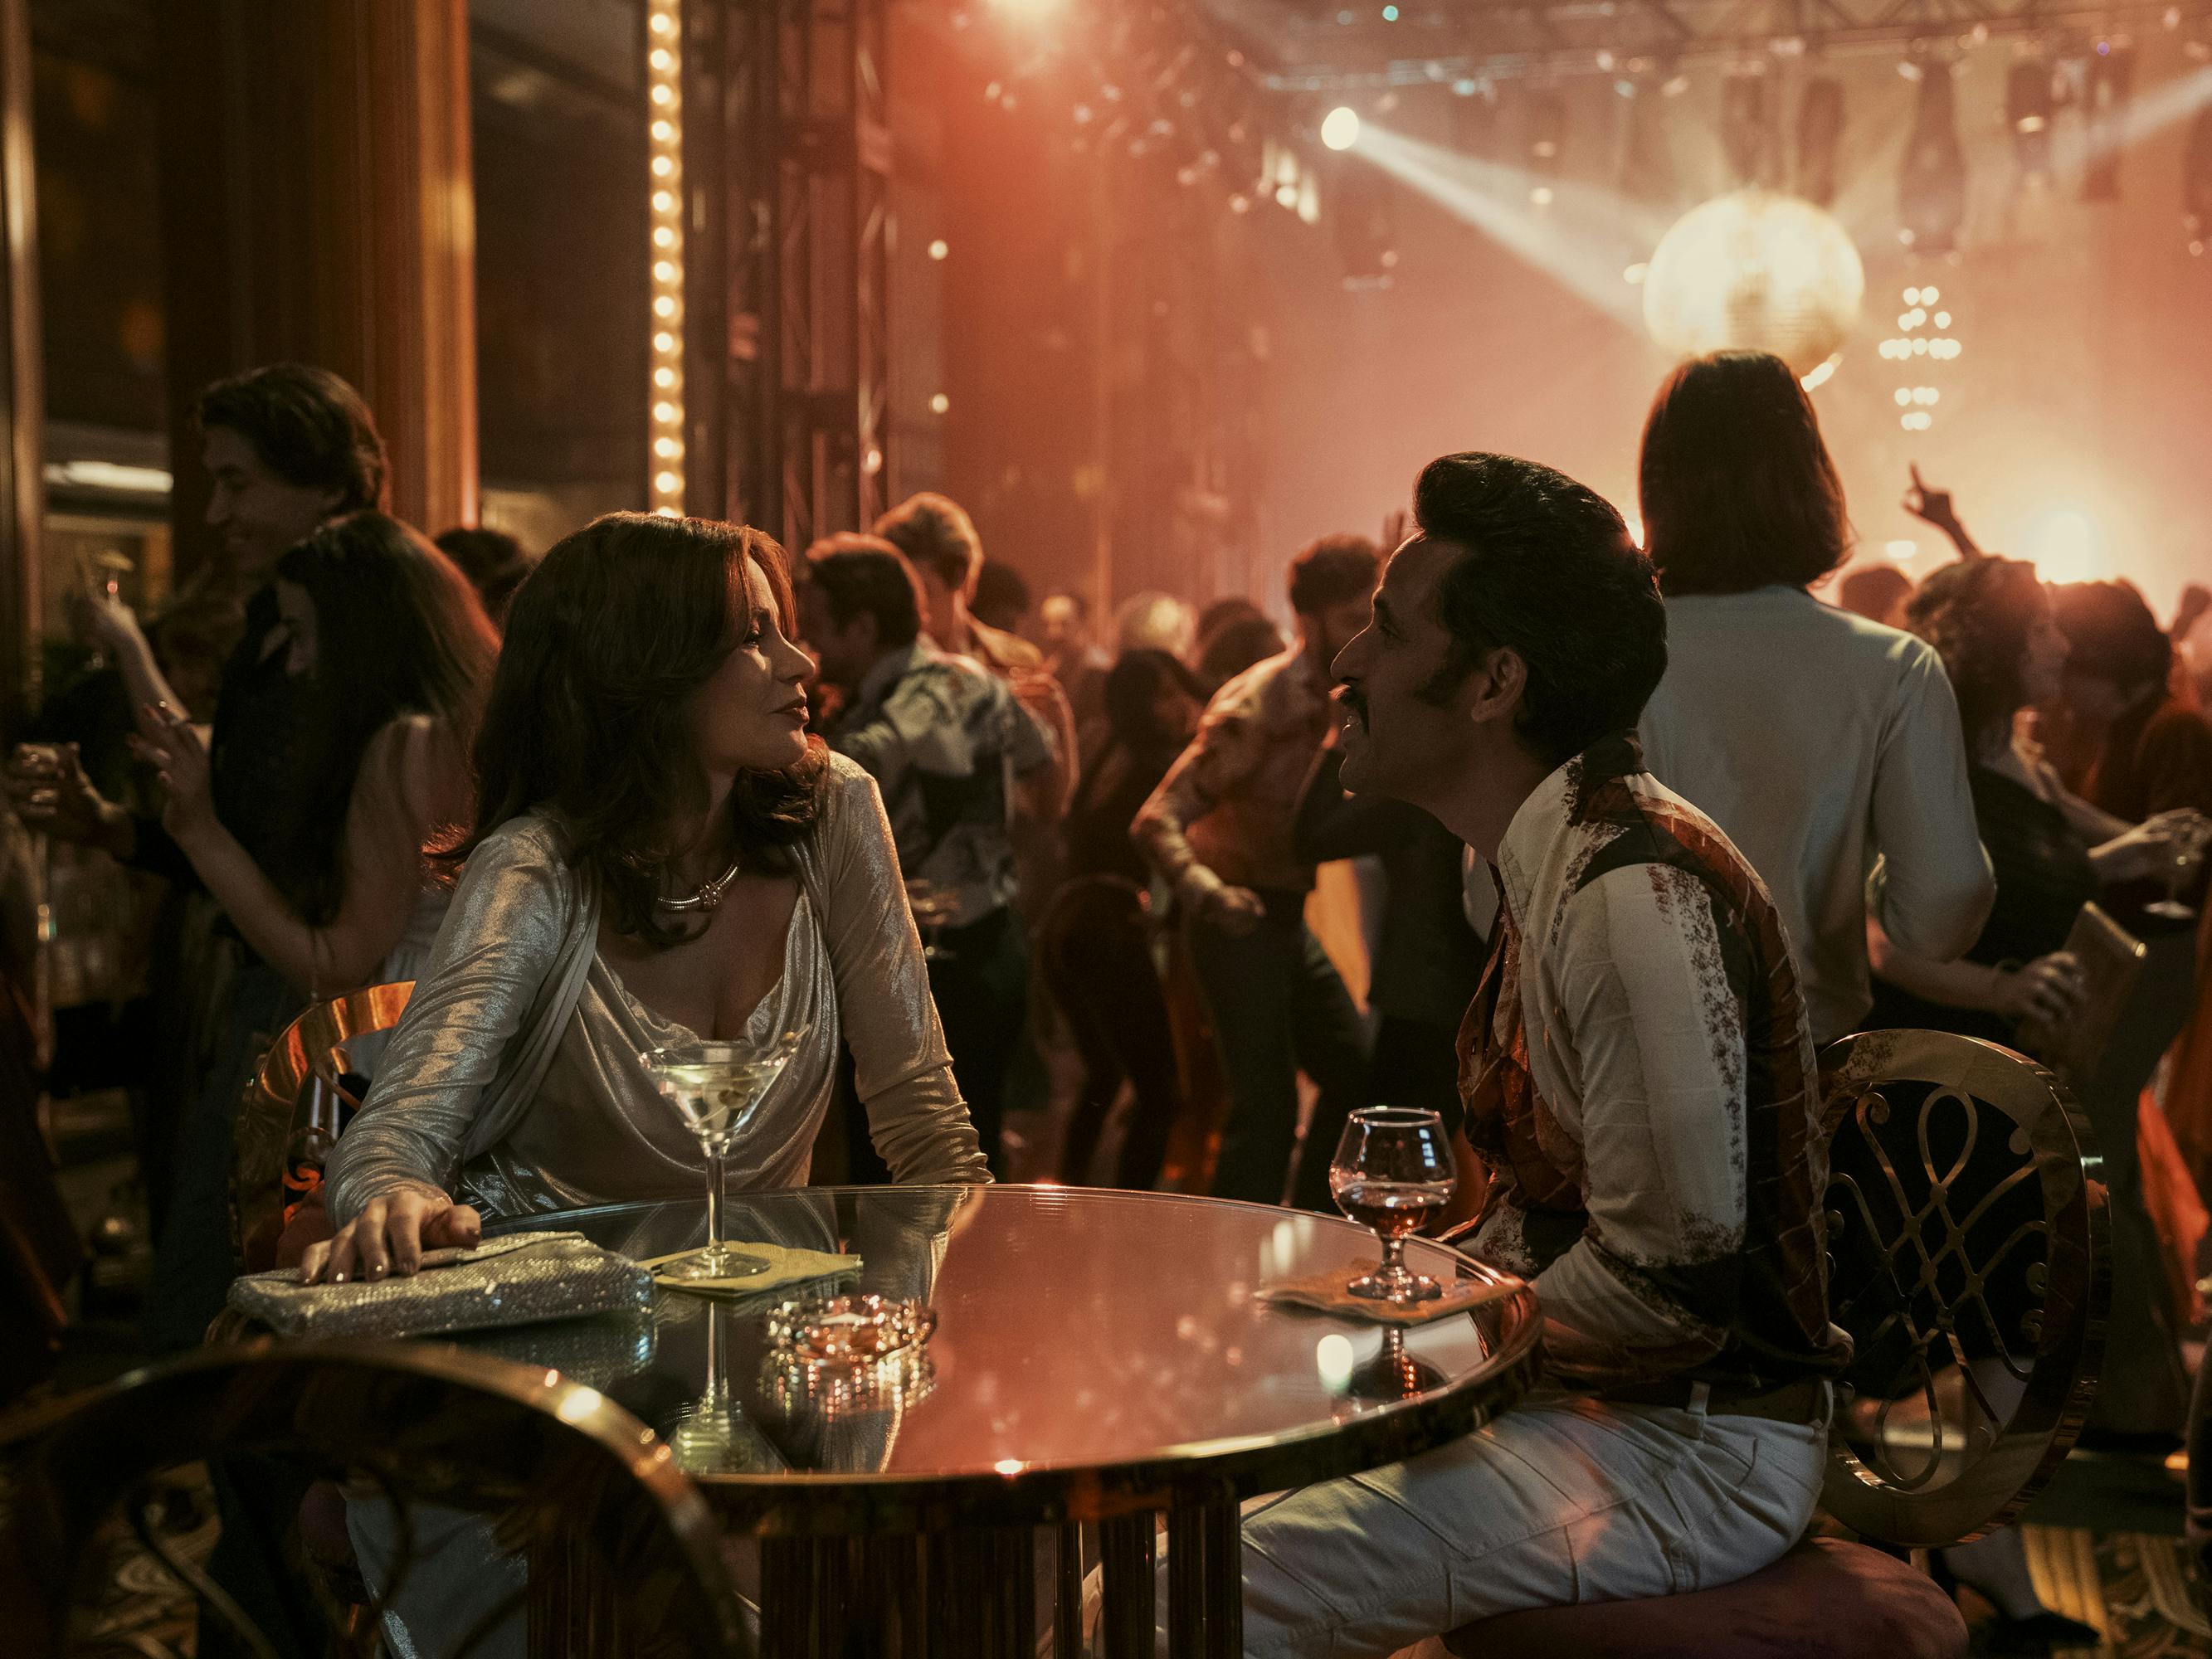 Griselda (Sofia Vergara) and Johnny (Wilmer Calderon) sit together in a red-lit bar.